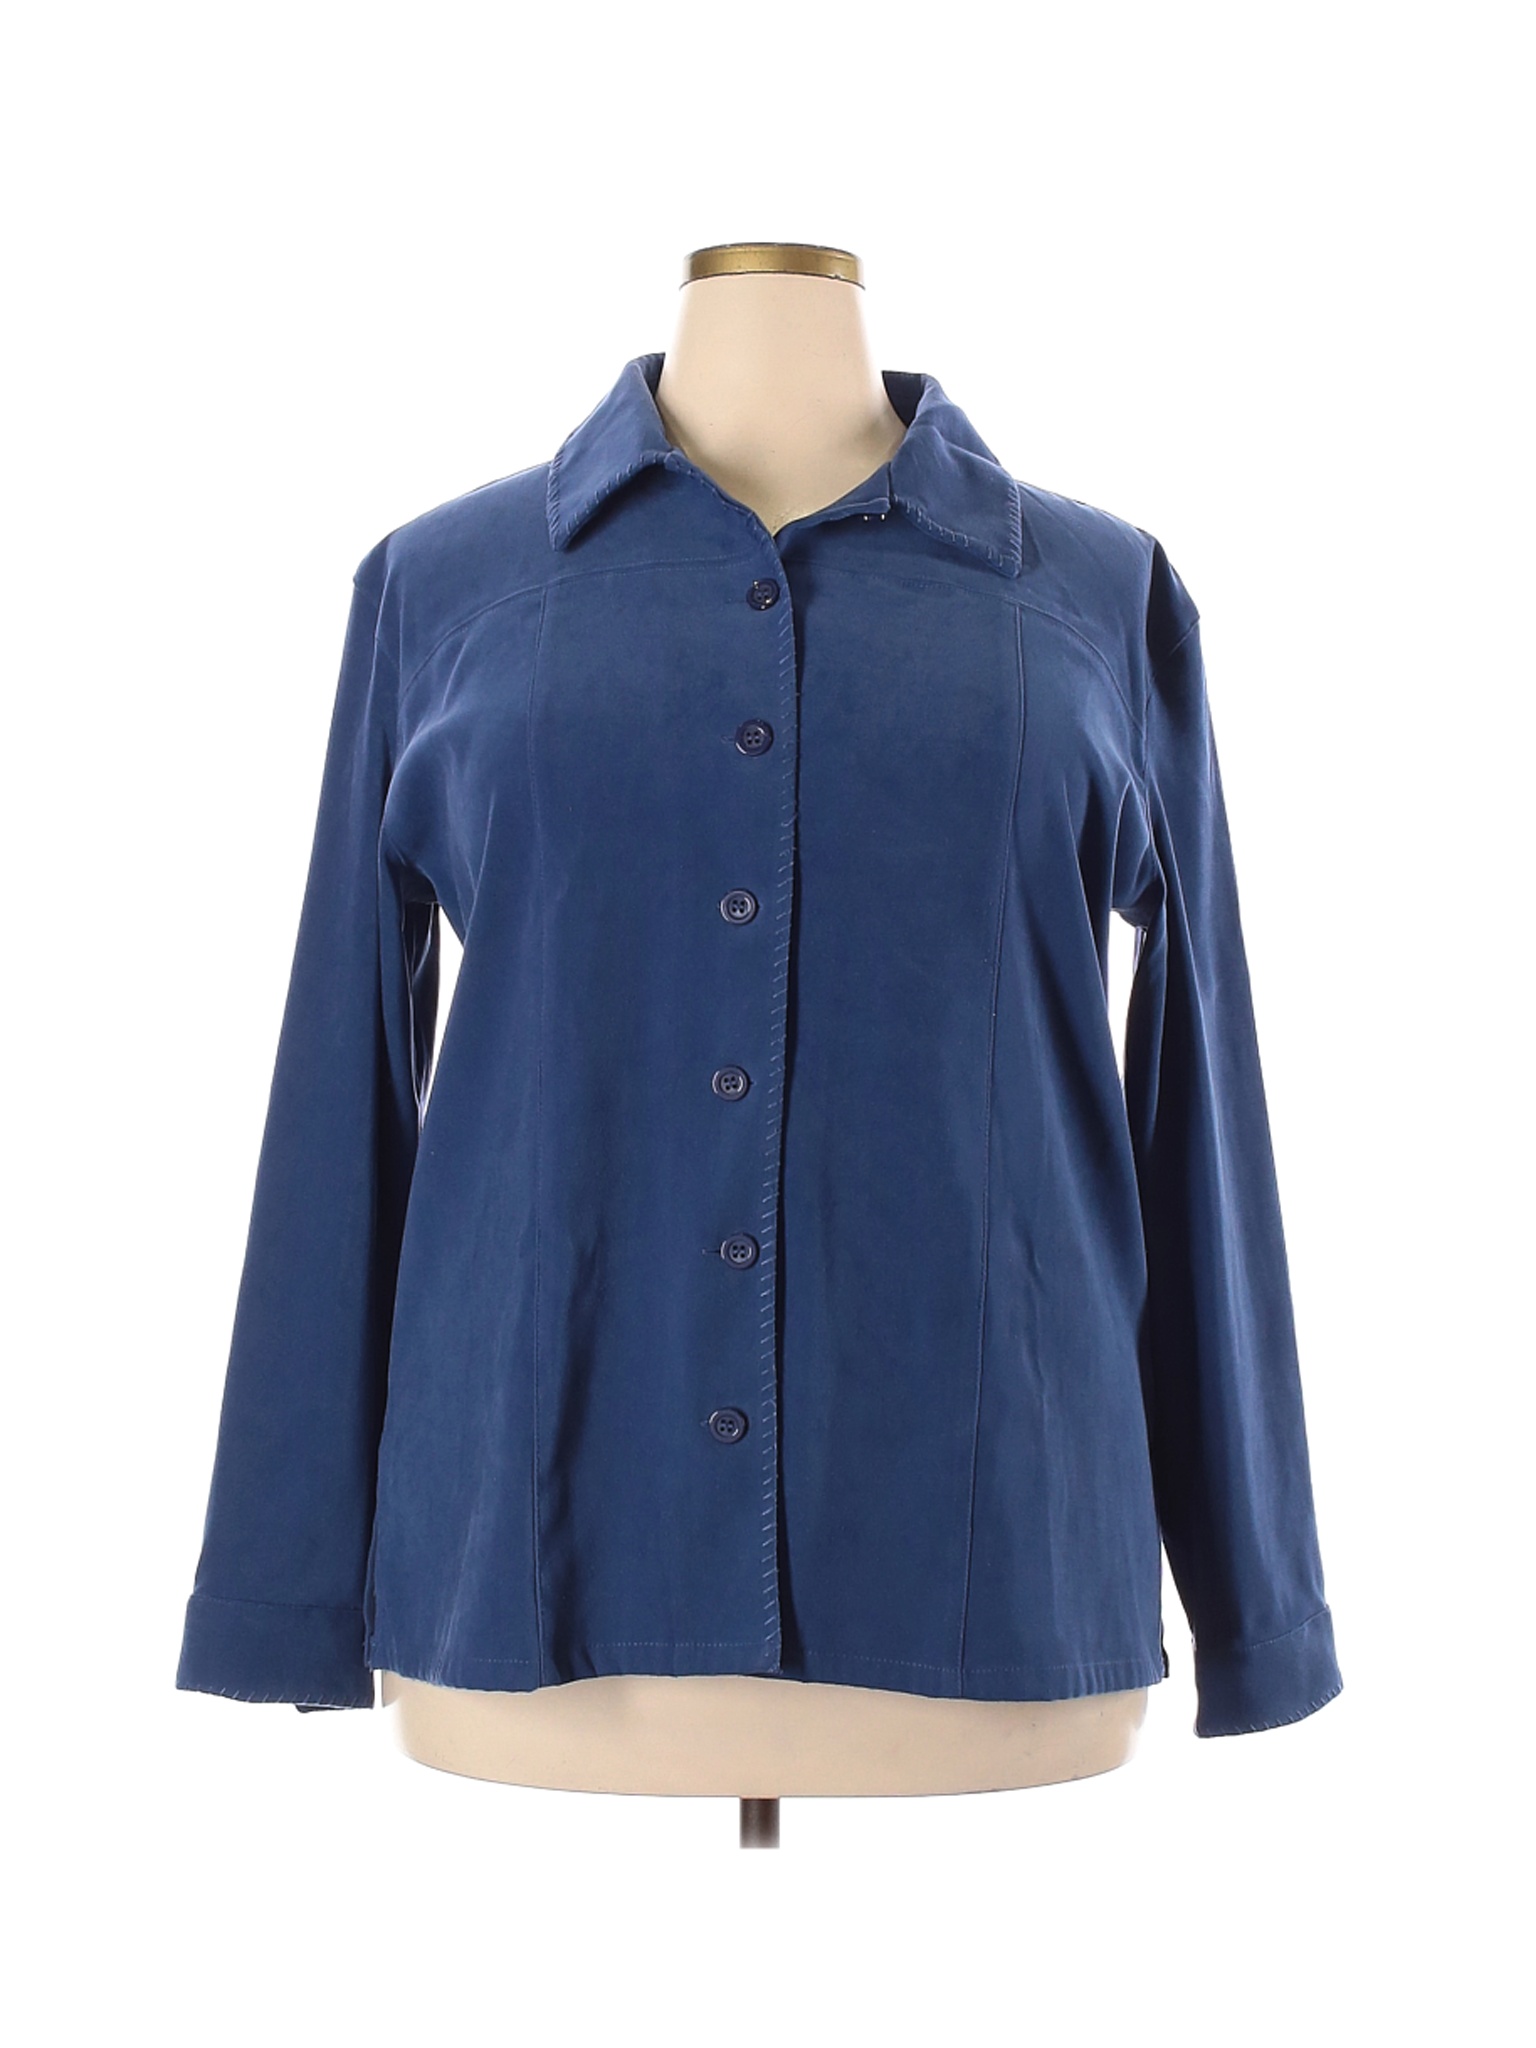 Karen Scott Sport Women Blue Jacket XL | eBay